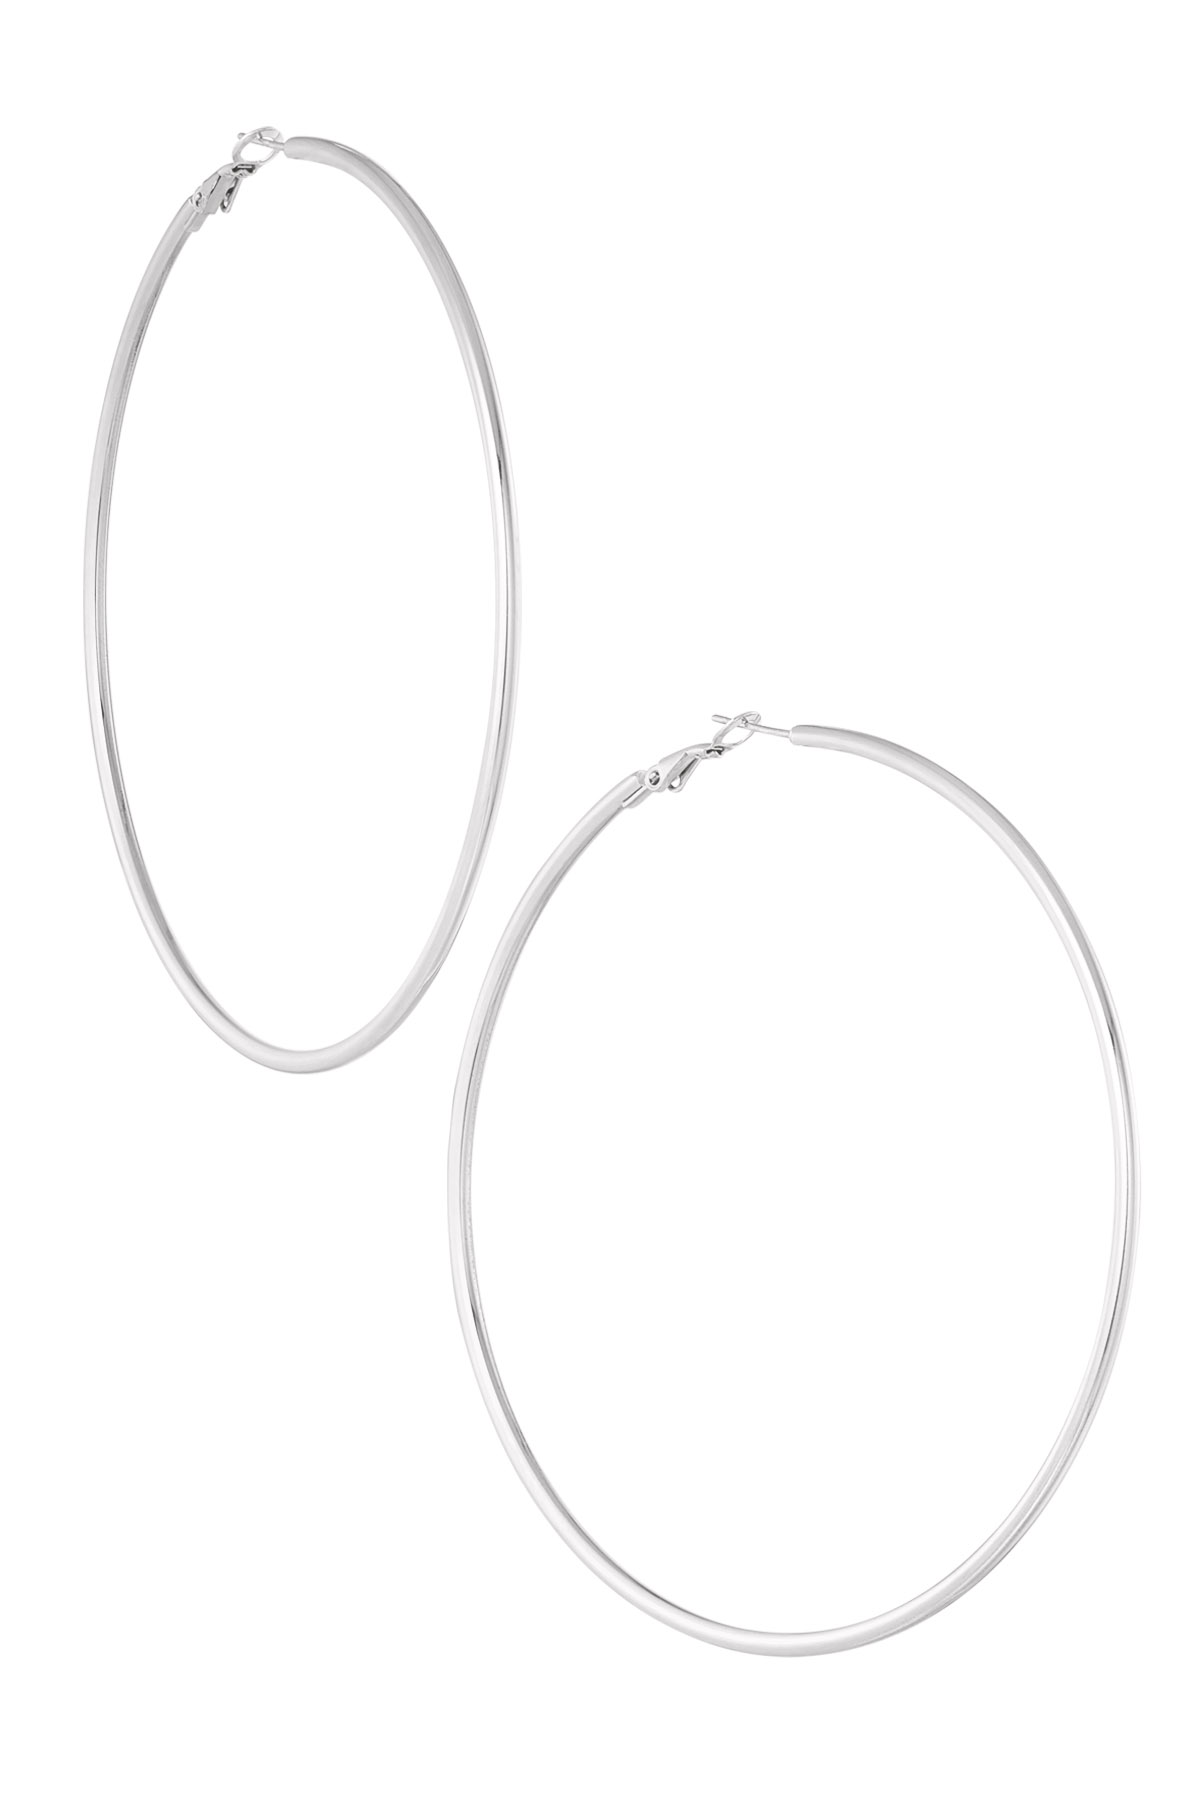 Earrings thin basic hoops - silver